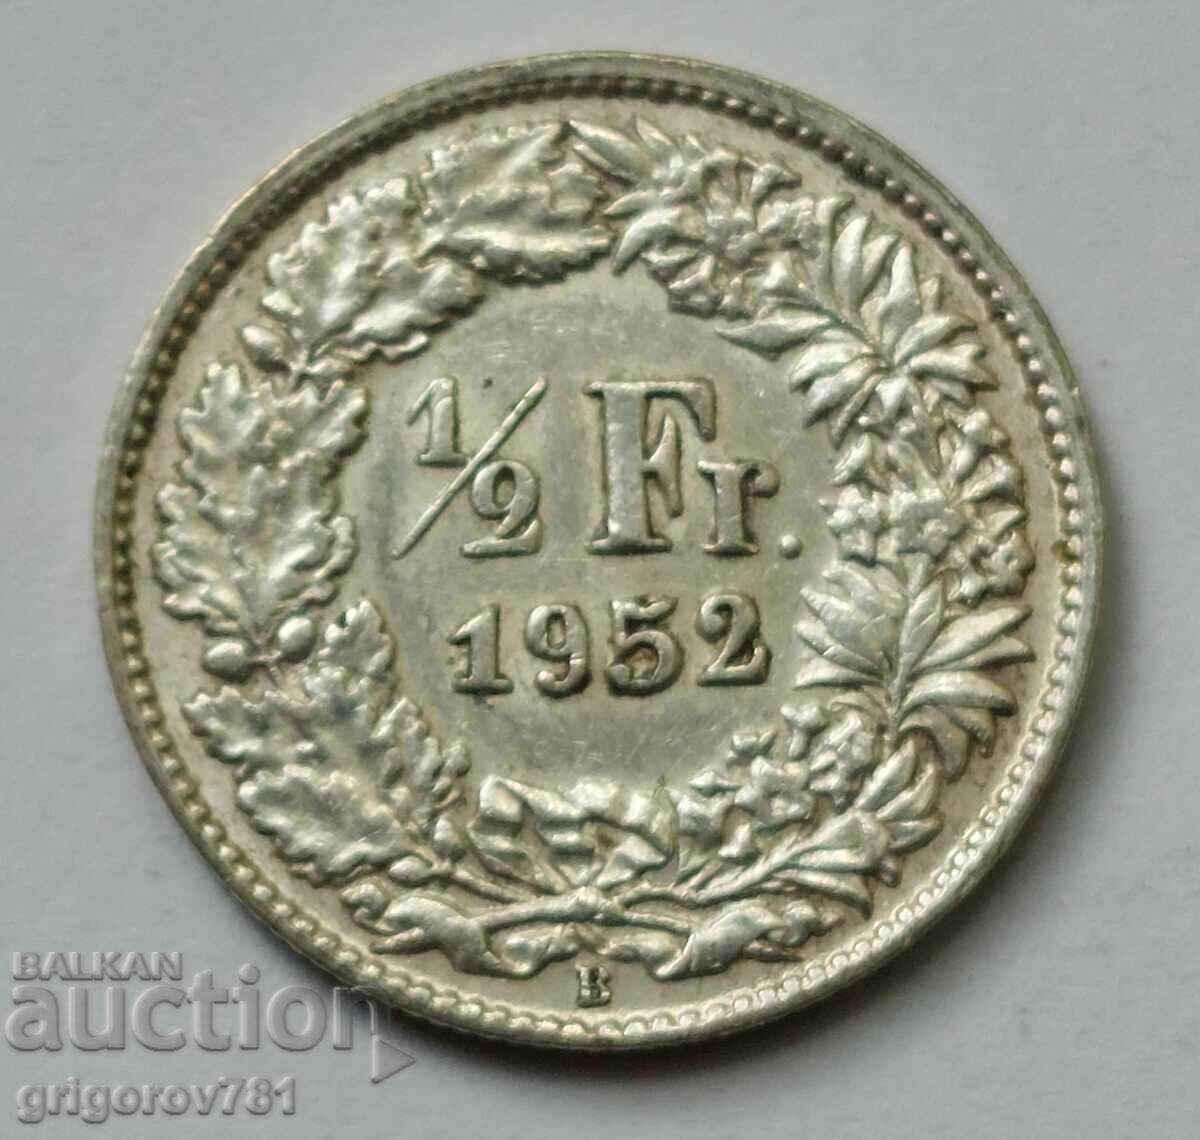 1/2 Franc Silver Switzerland 1952 B - Silver Coin #84